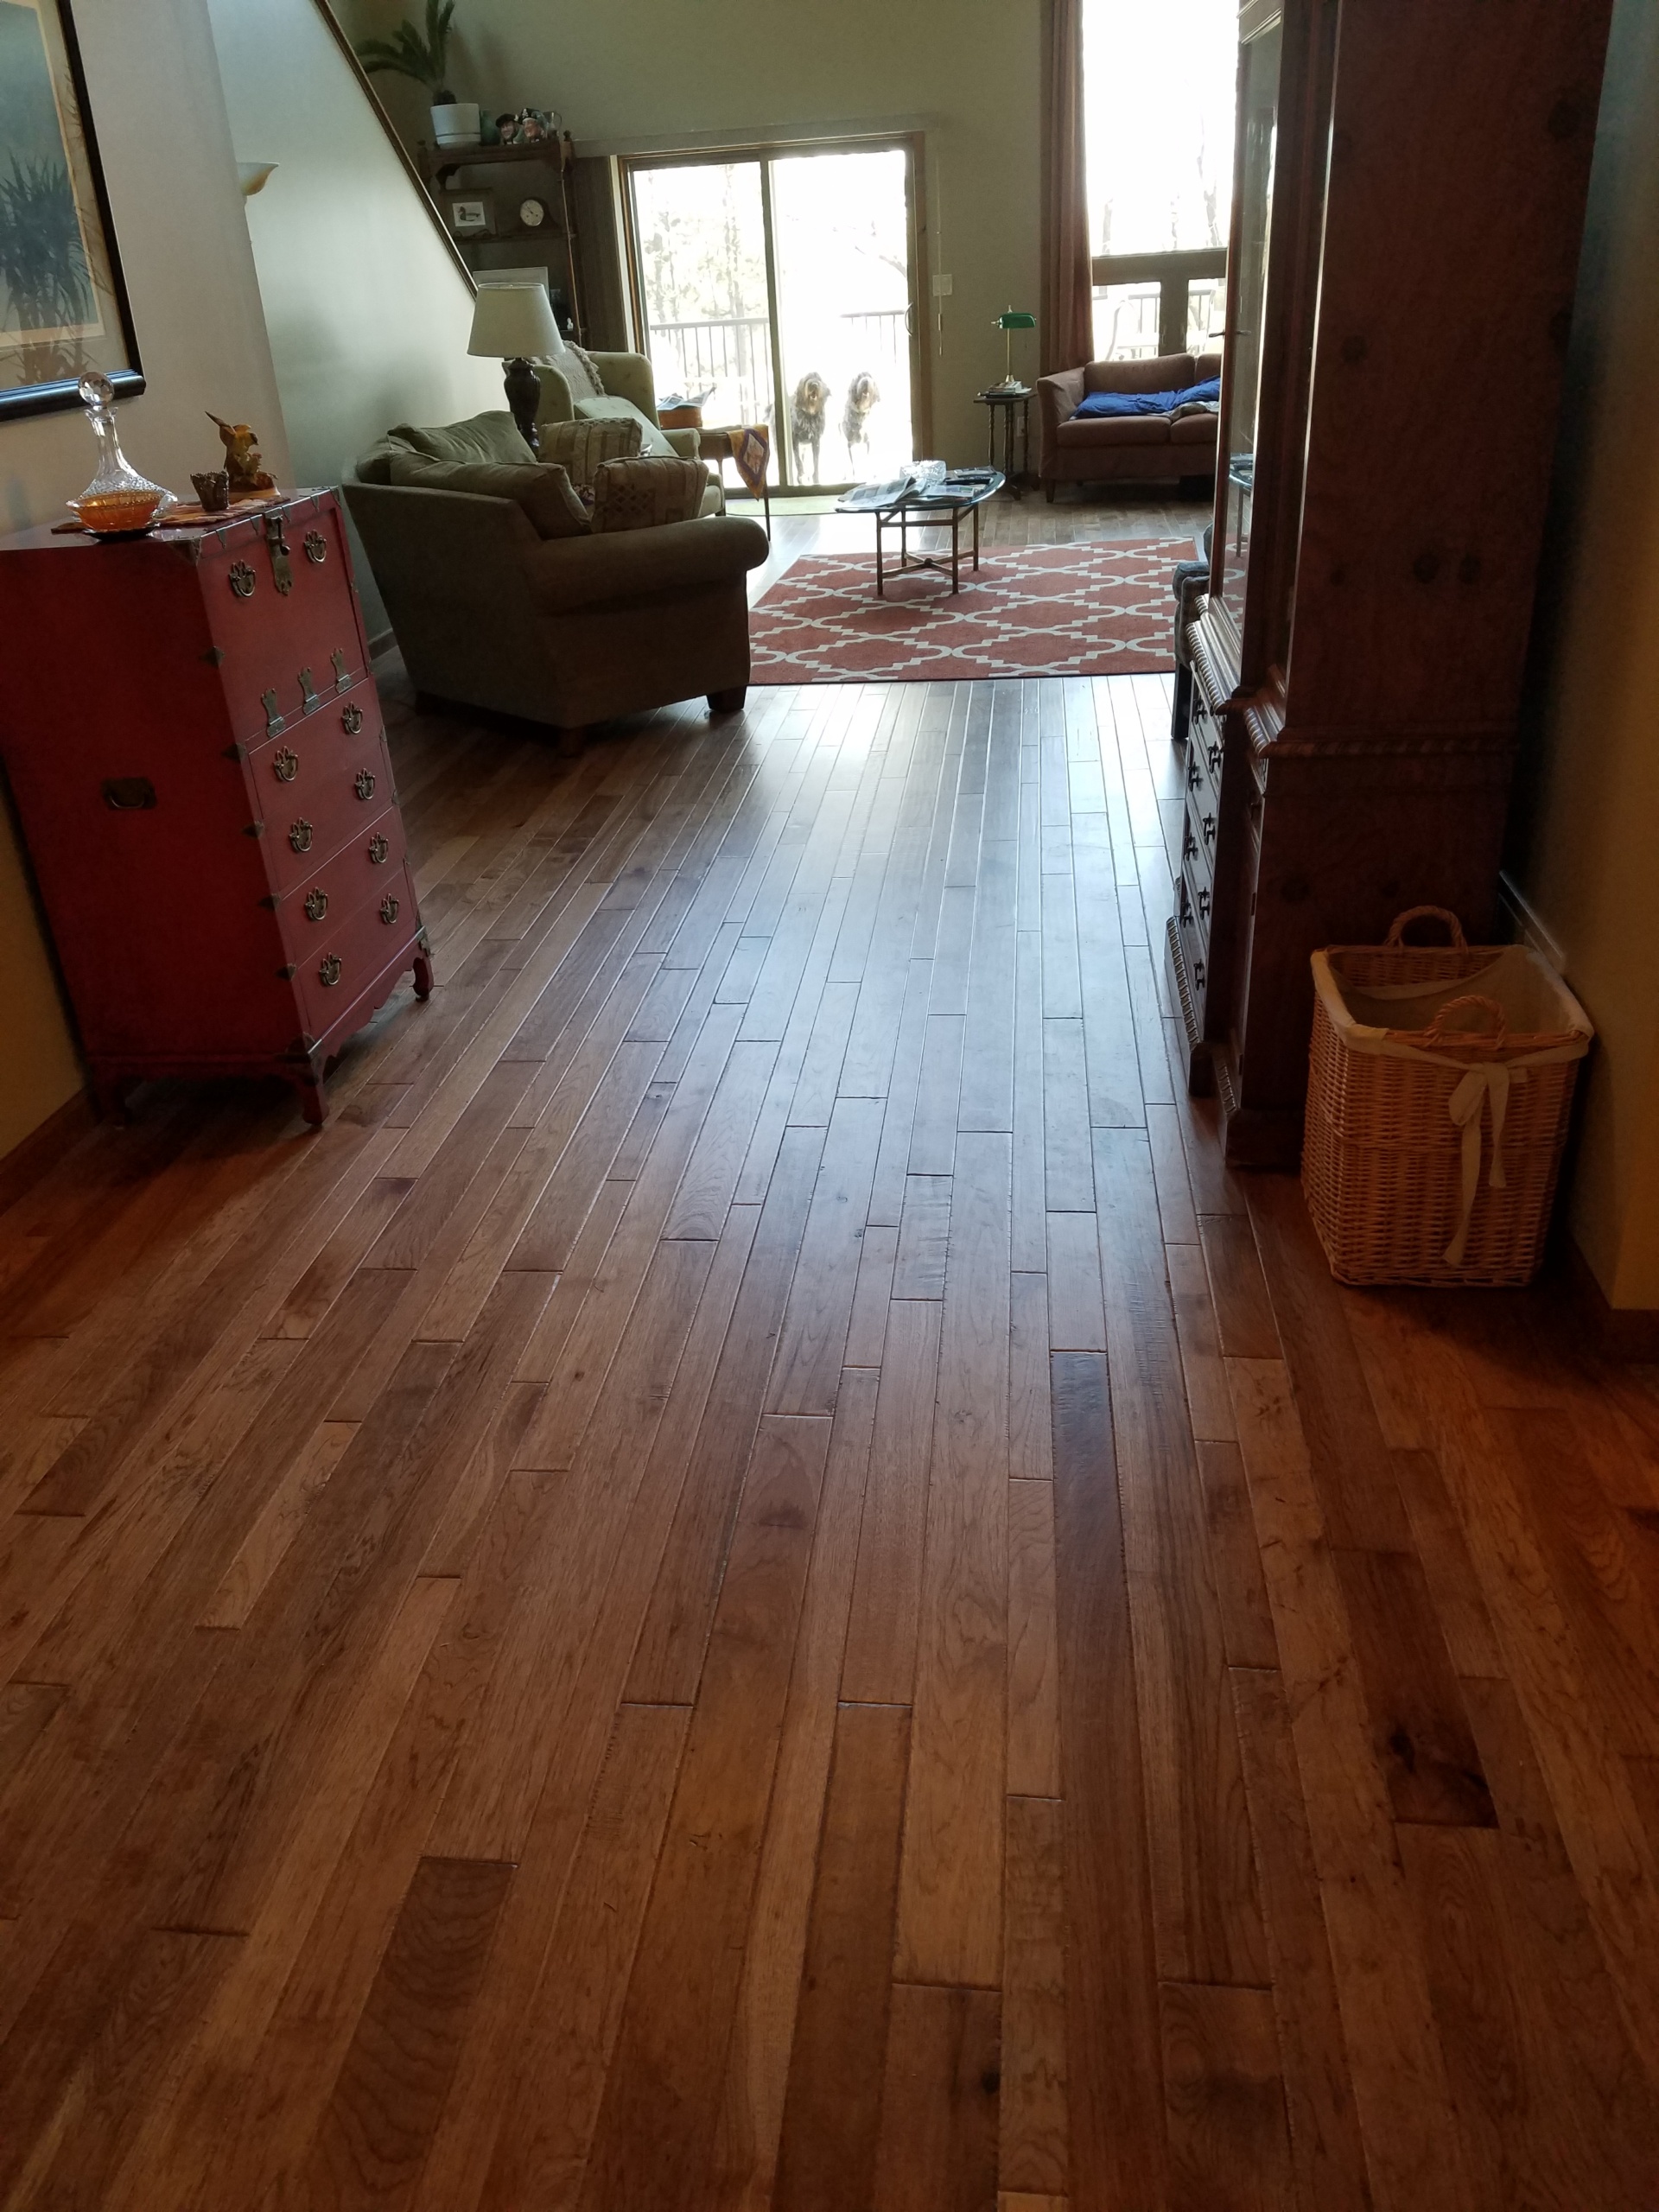 hardwood flooring going into the living room